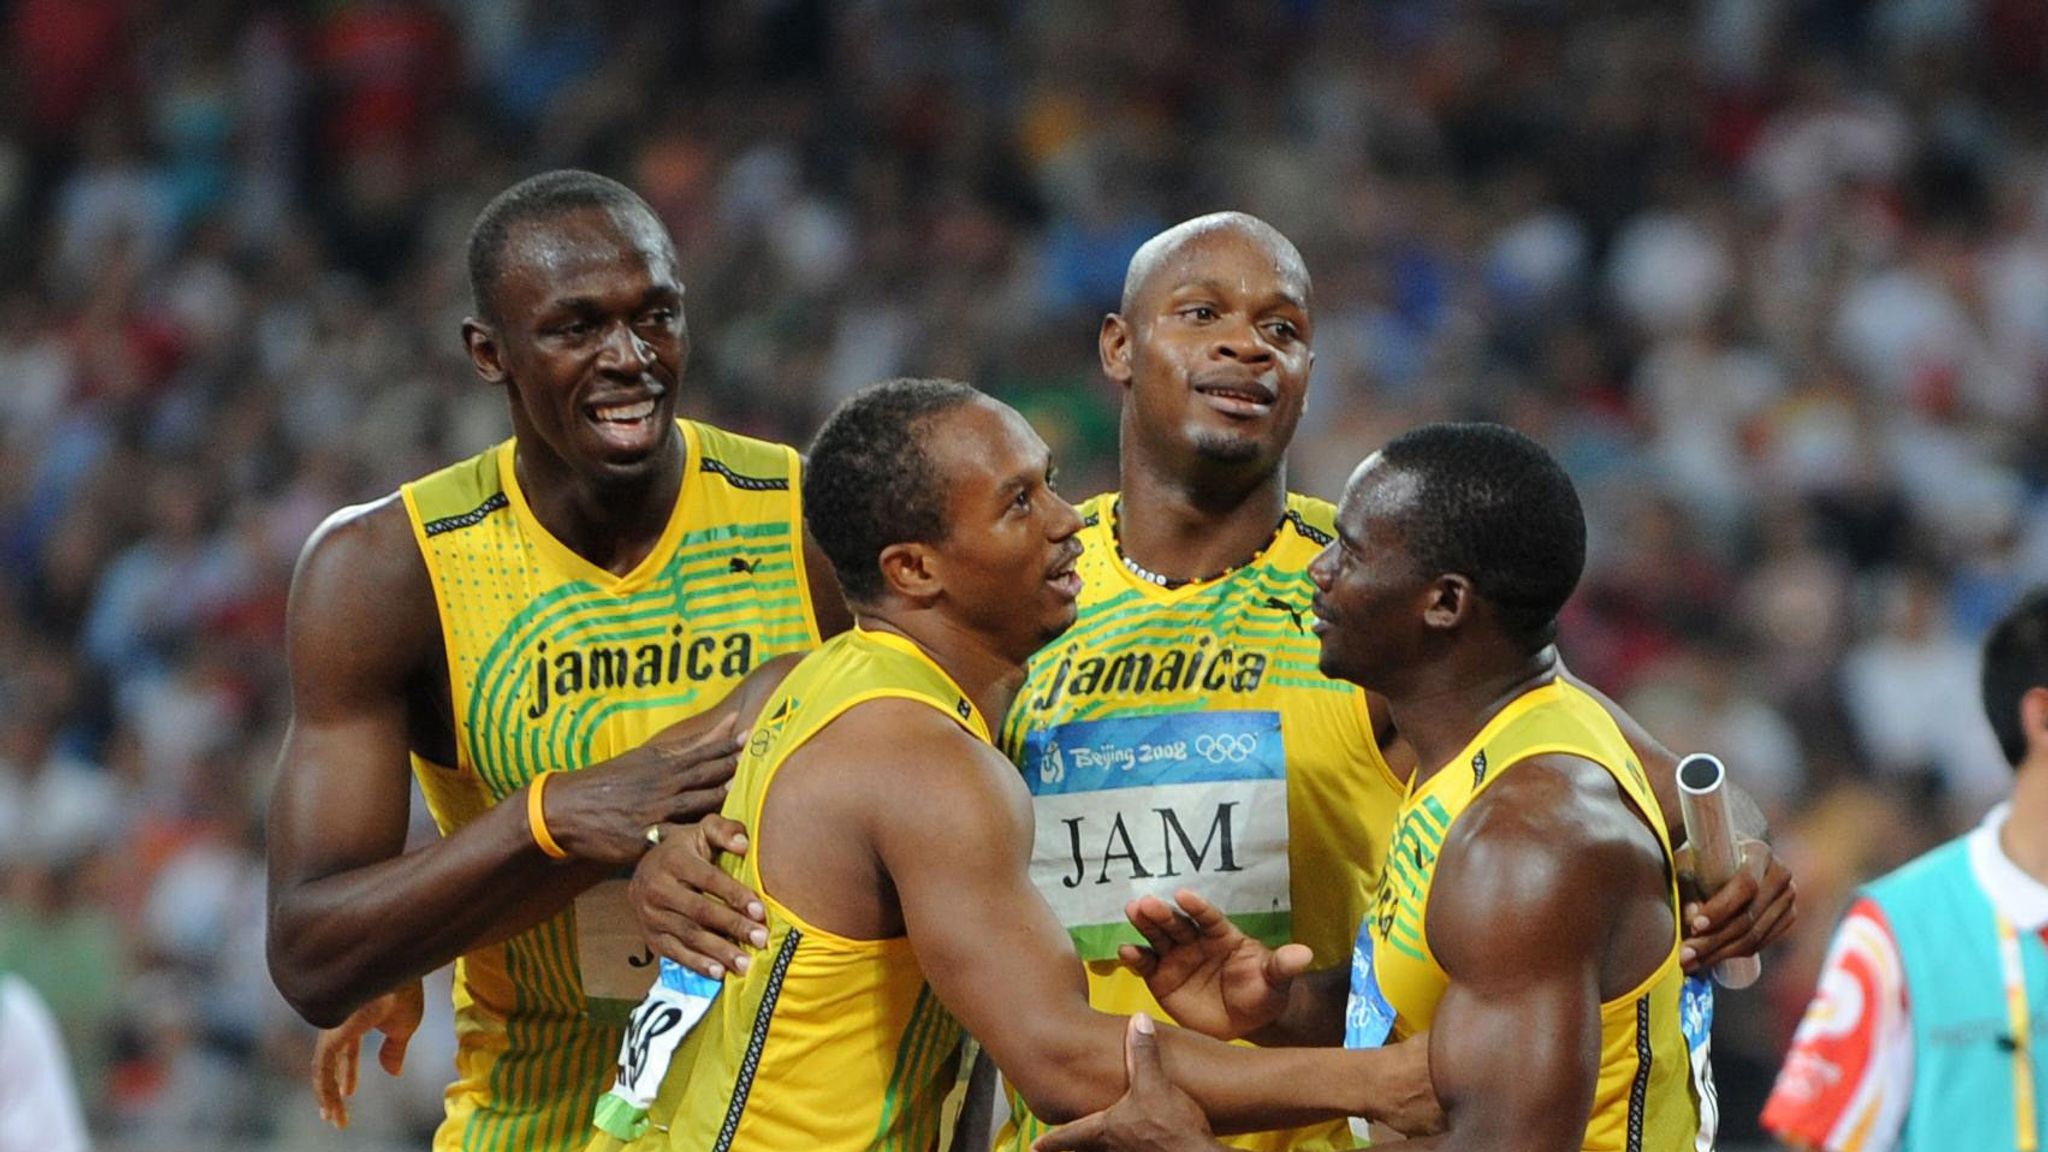 Jamaican Sprinter Nesta Carter To Appeal Doping Test Result Athletics News Sky Sports